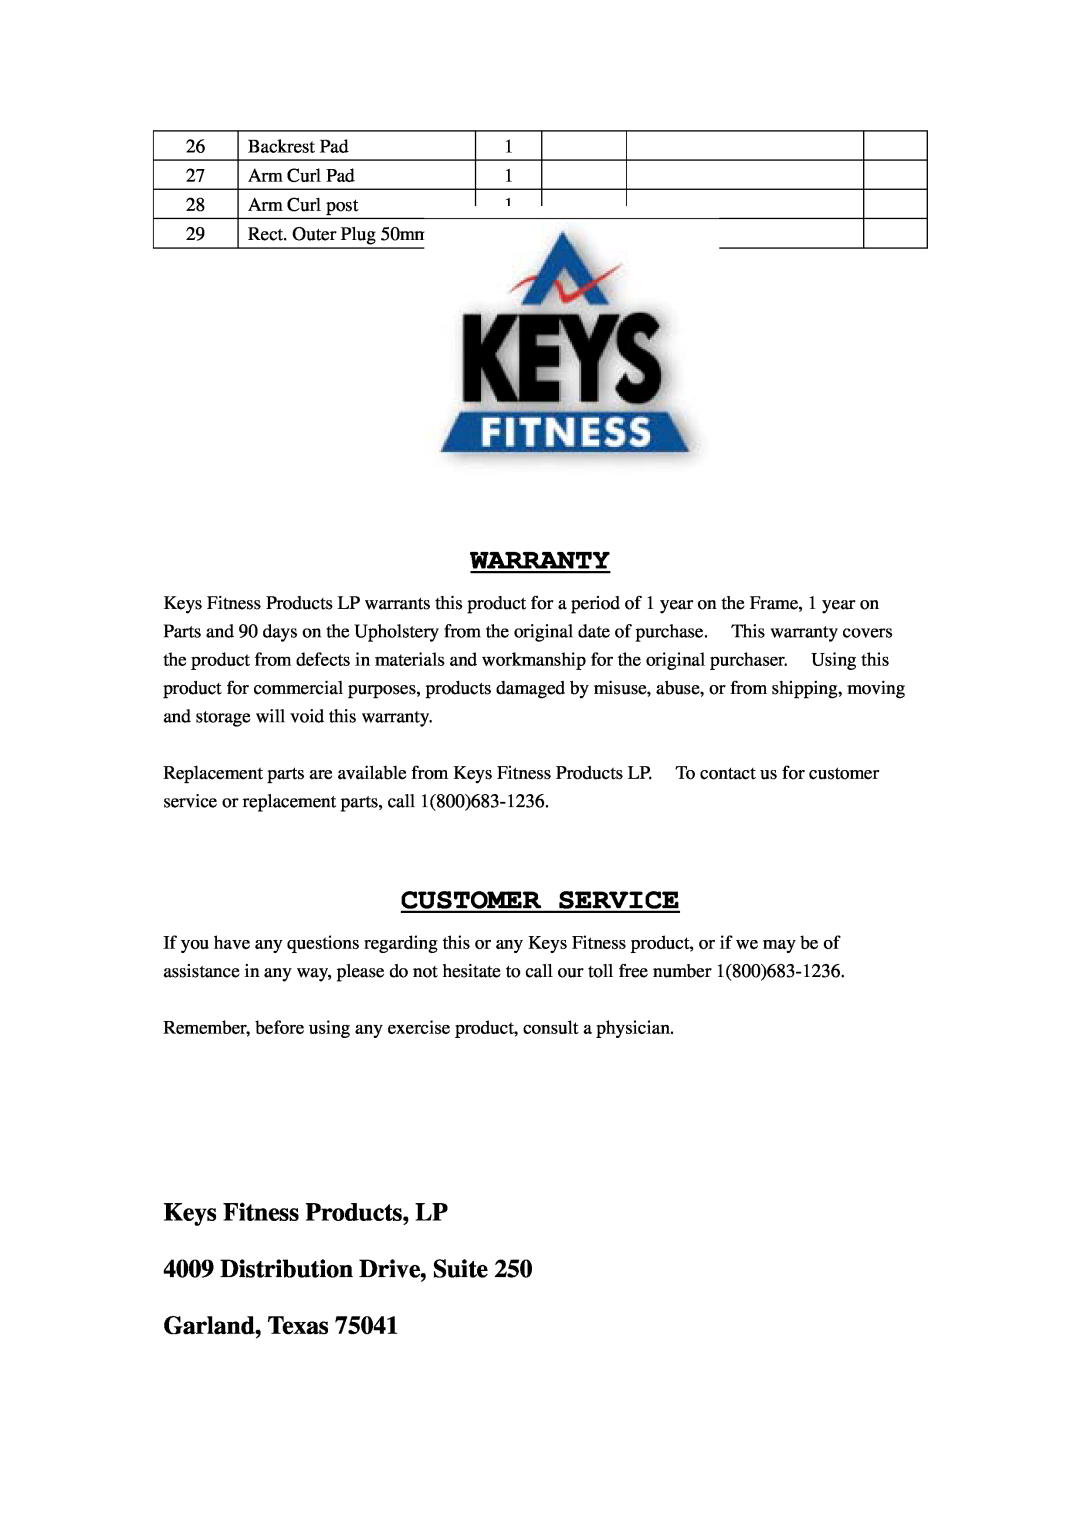 Keys Fitness ST-2600 Warranty, Customer Service, Keys Fitness Products, LP 4009 Distribution Drive, Suite, Garland, Texas 